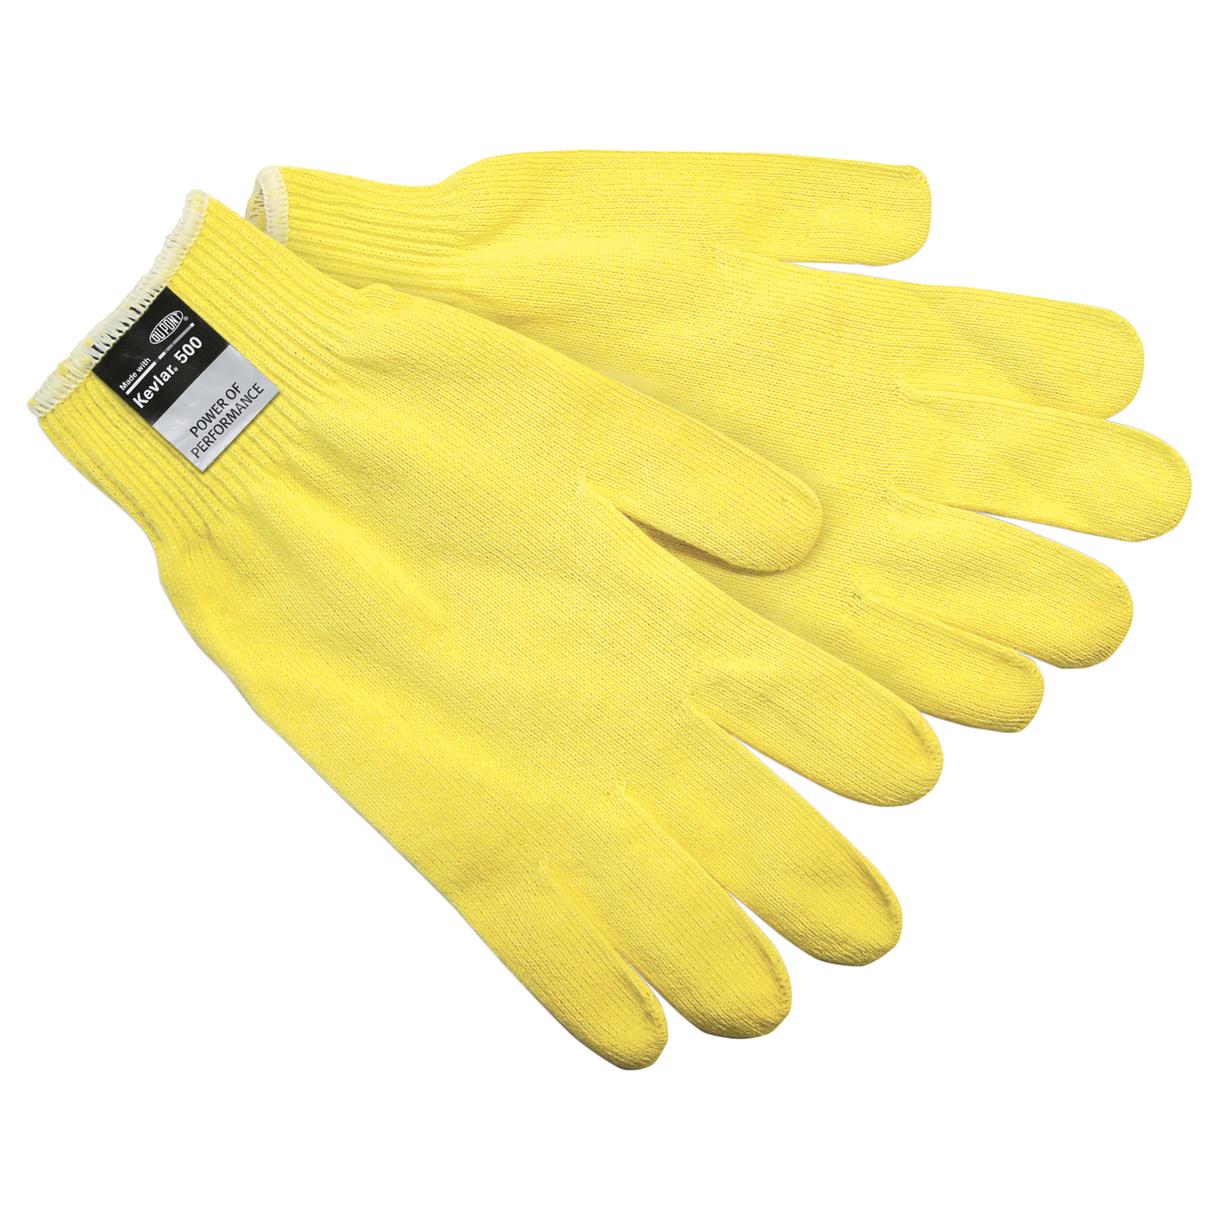 Cut Resistant Kevlar Gloves, 13 Gauge Ultra-Lightweight Fibers - Medium